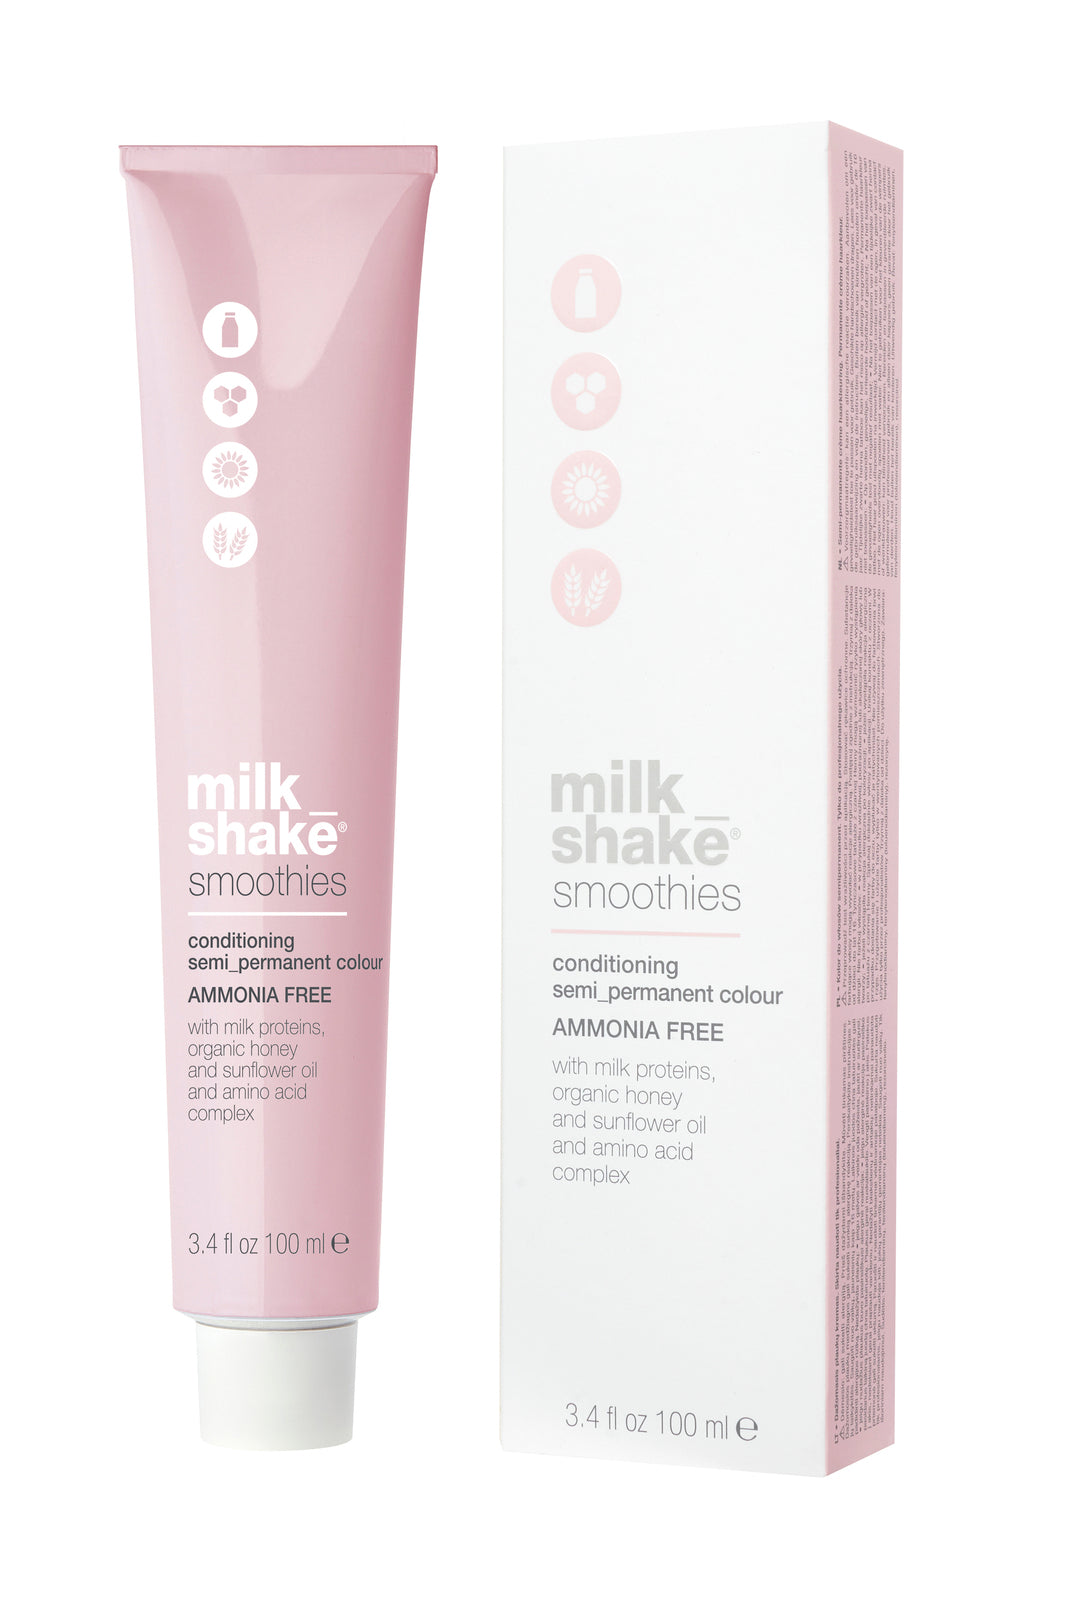 Milkshake smoothies semi-permanent color 9